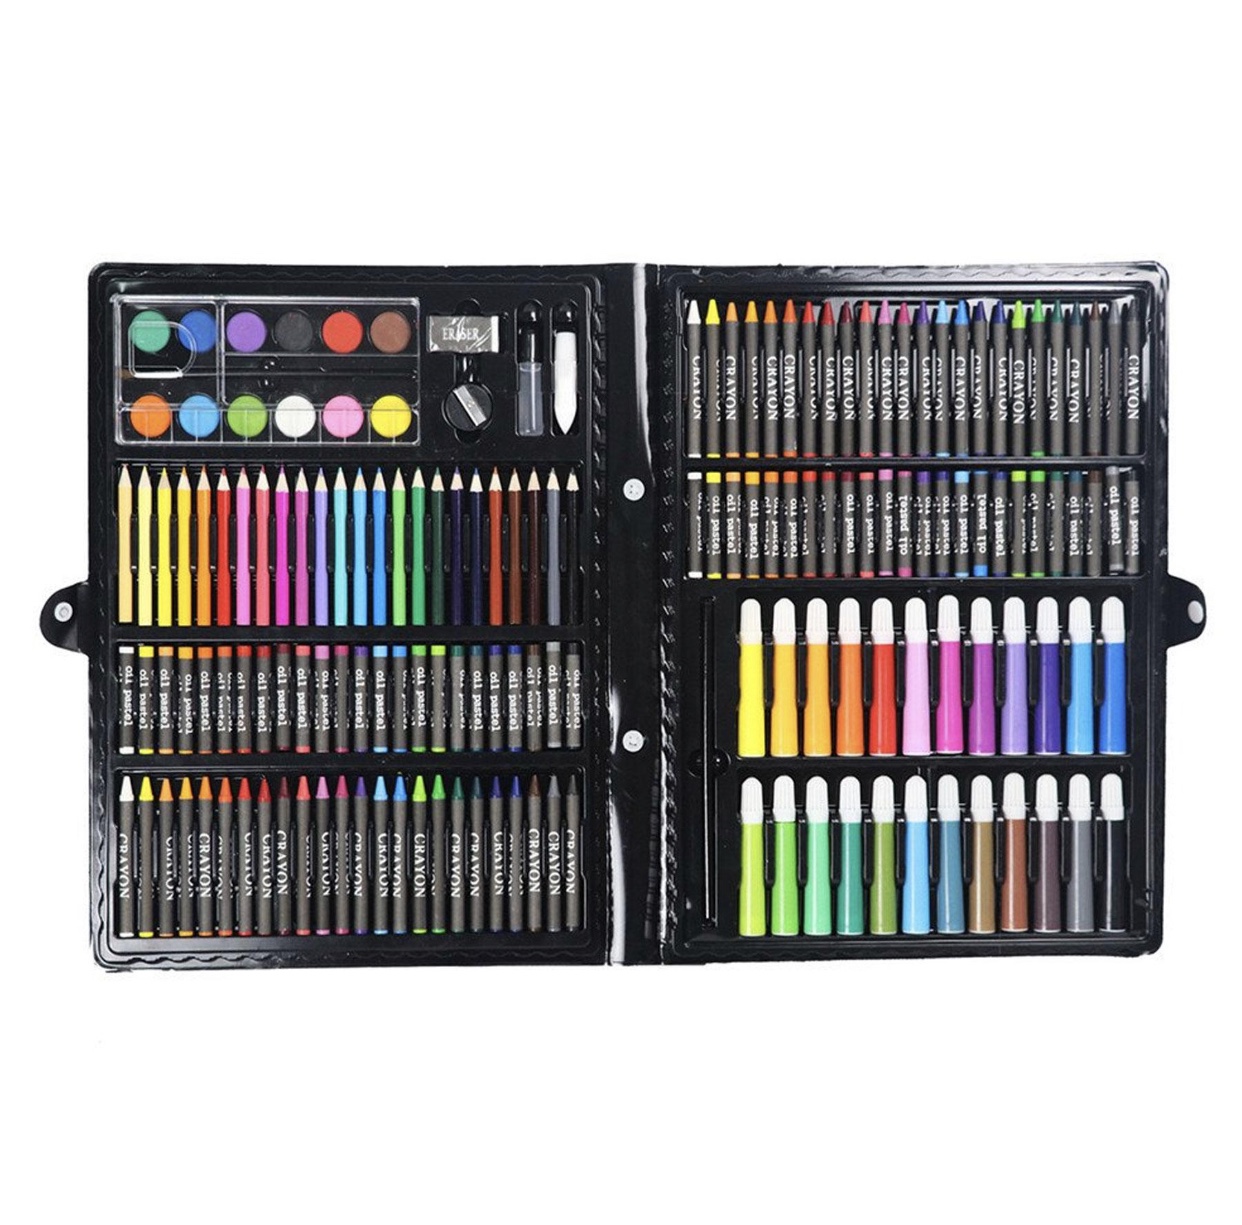 168 PCS Kids Super Mega ART Coloring Set for Arts & Crafts / Drawing &  Painting Supplies MP-KEIMAV